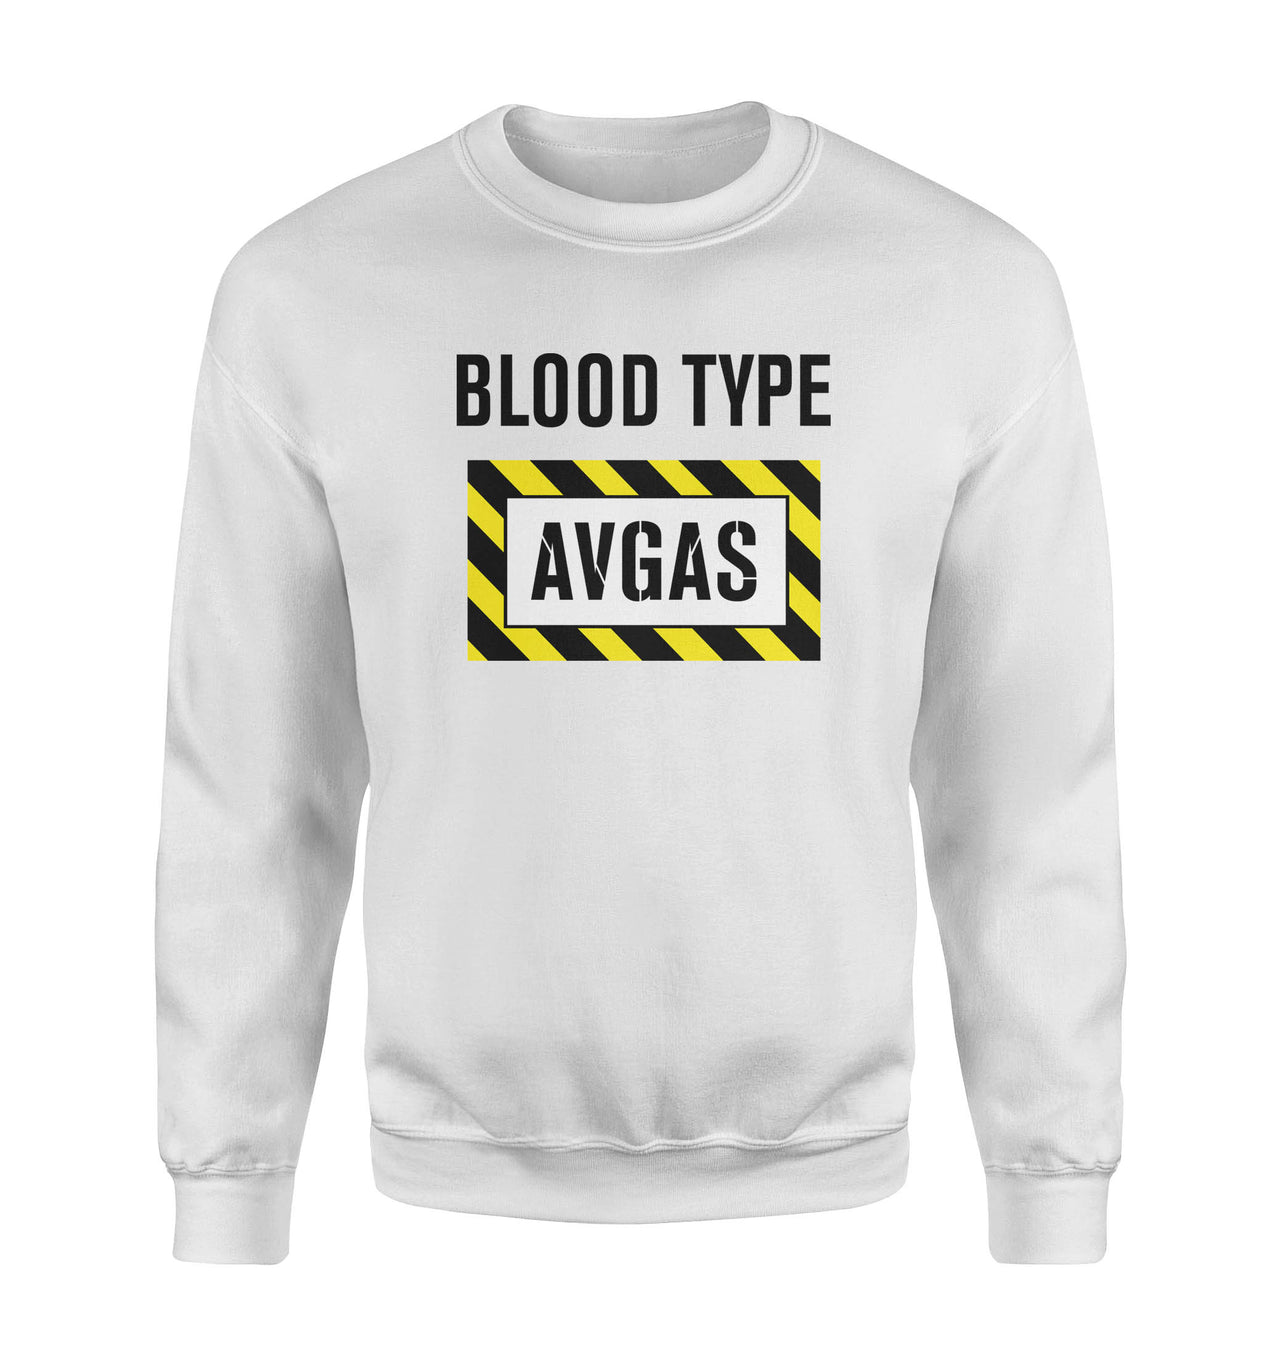 Blood Type AVGAS Designed Sweatshirts